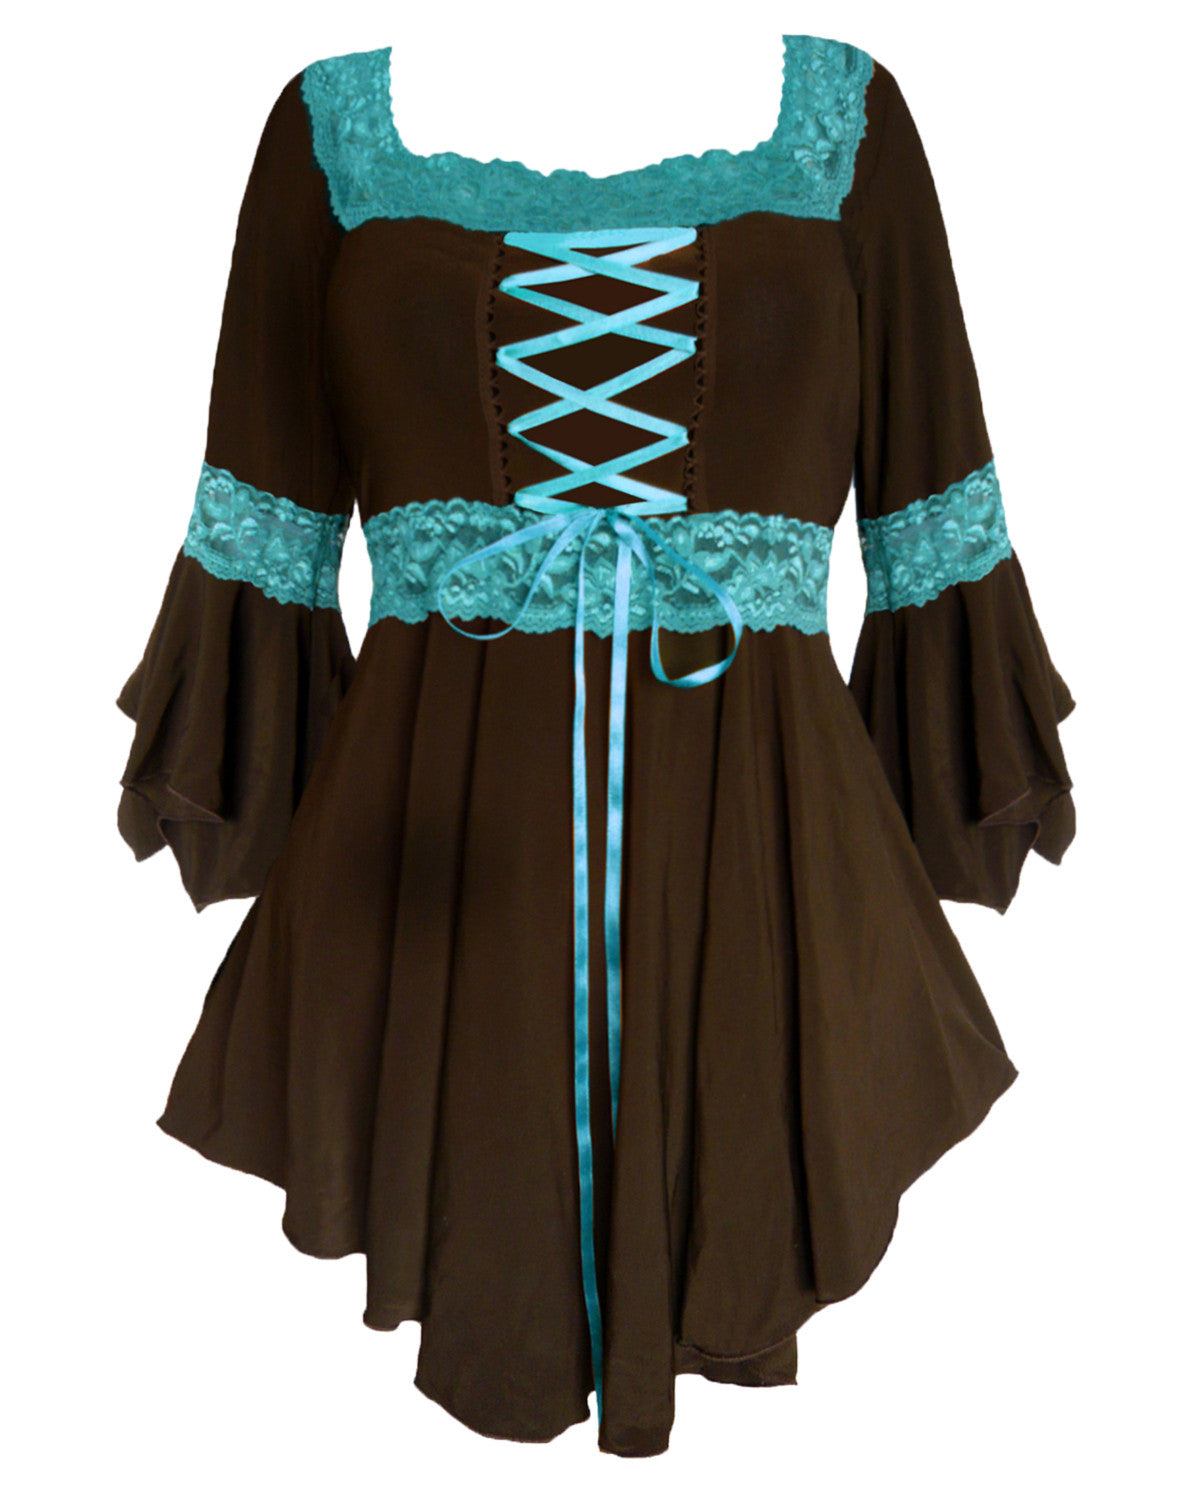 Renaissance Top in Brown/Turquoise  Aqua Lace Medieval Corset Blouse -  Dare Fashion